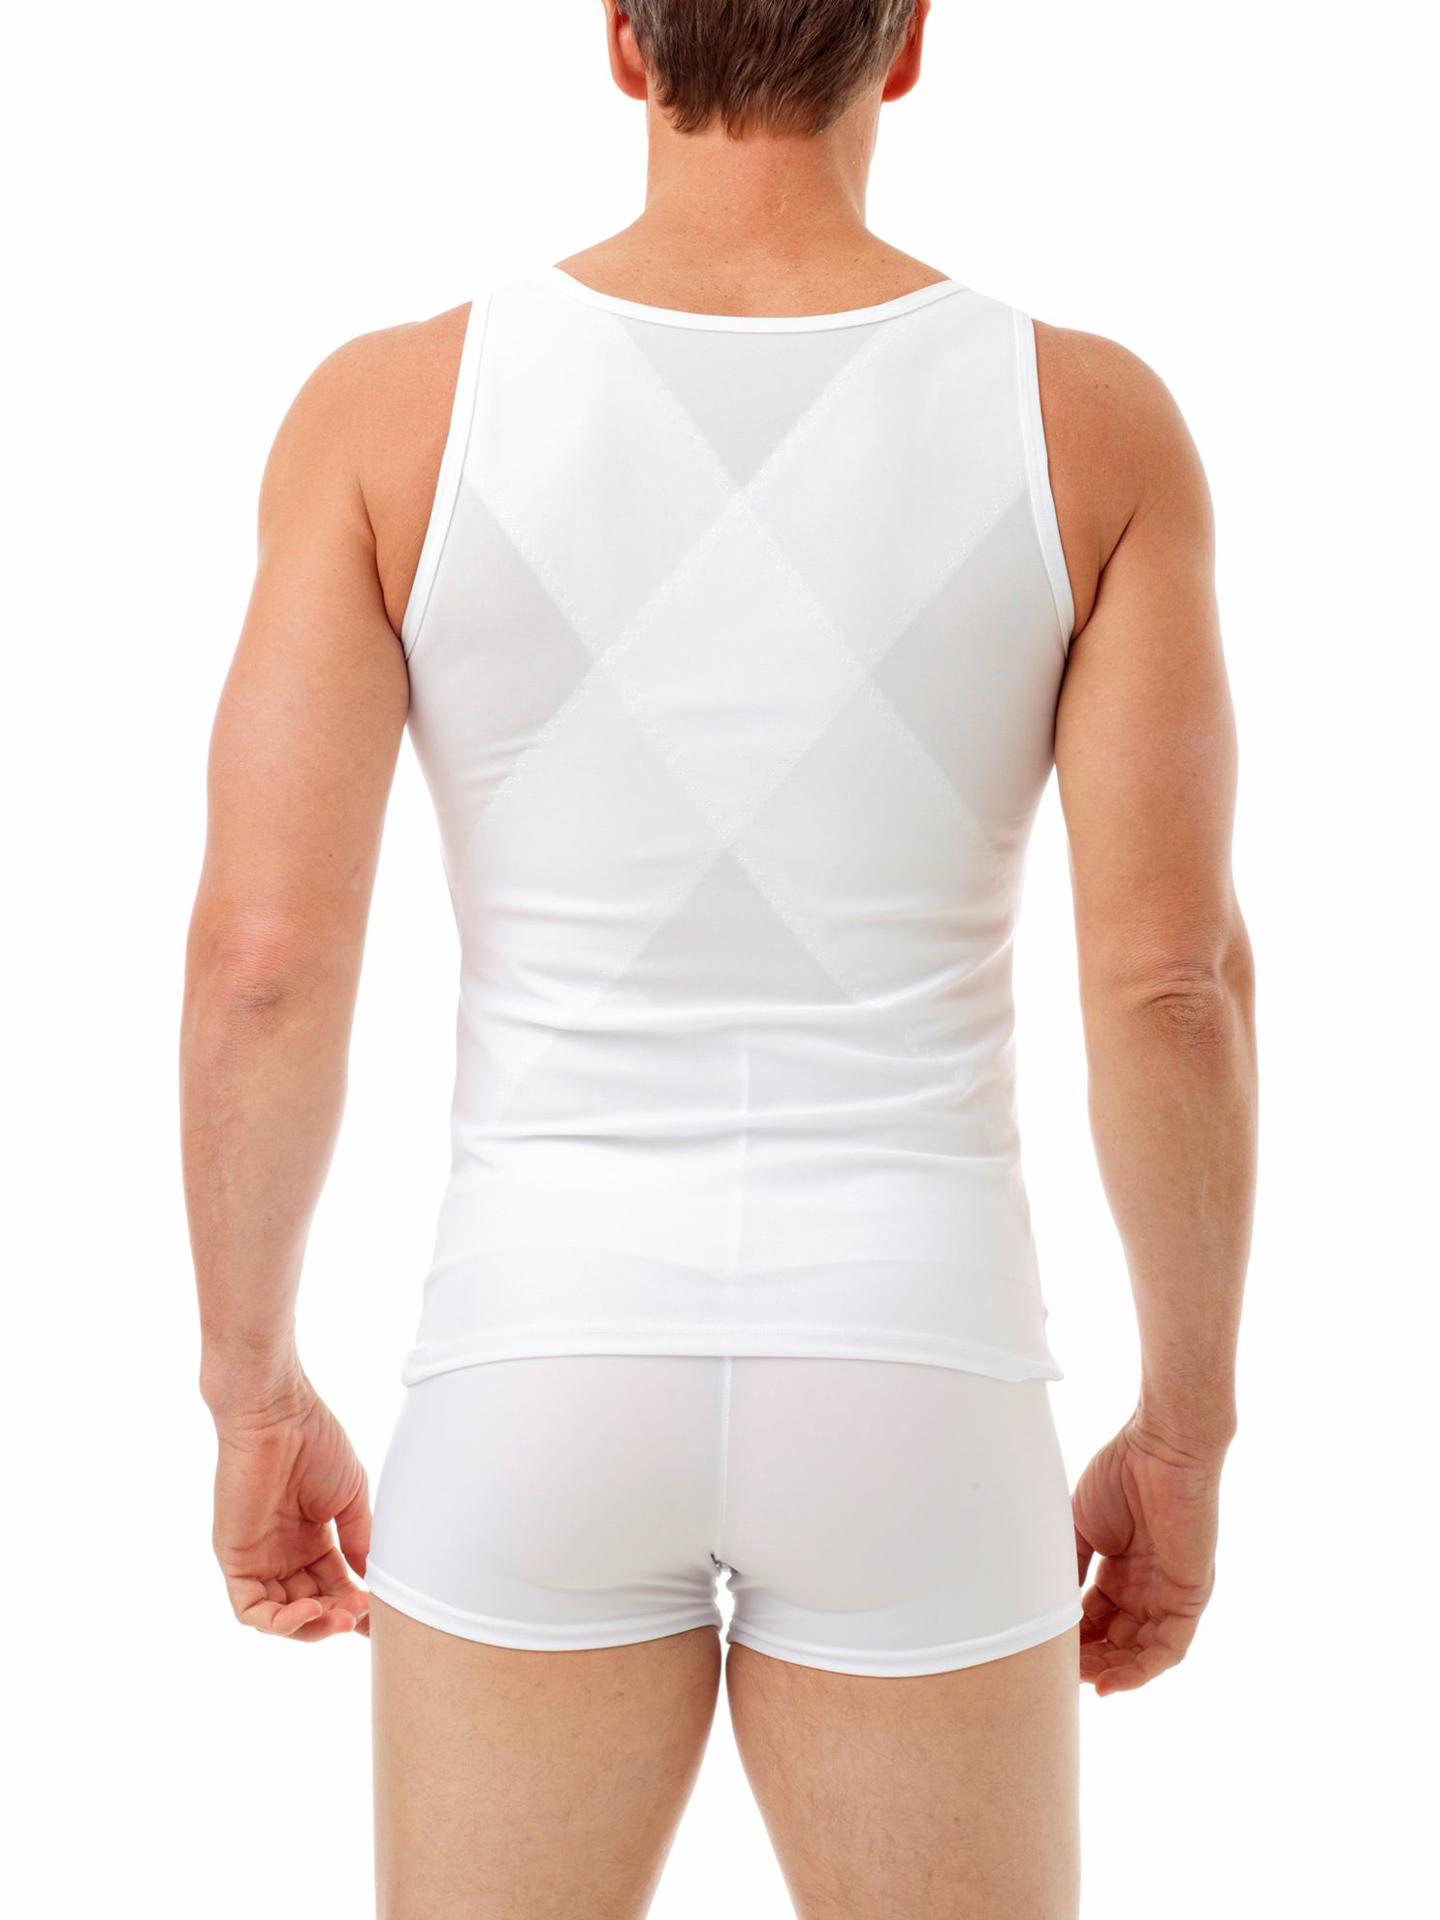 Men's Posture Corrector Shirt | Free Shipping on $75+ |